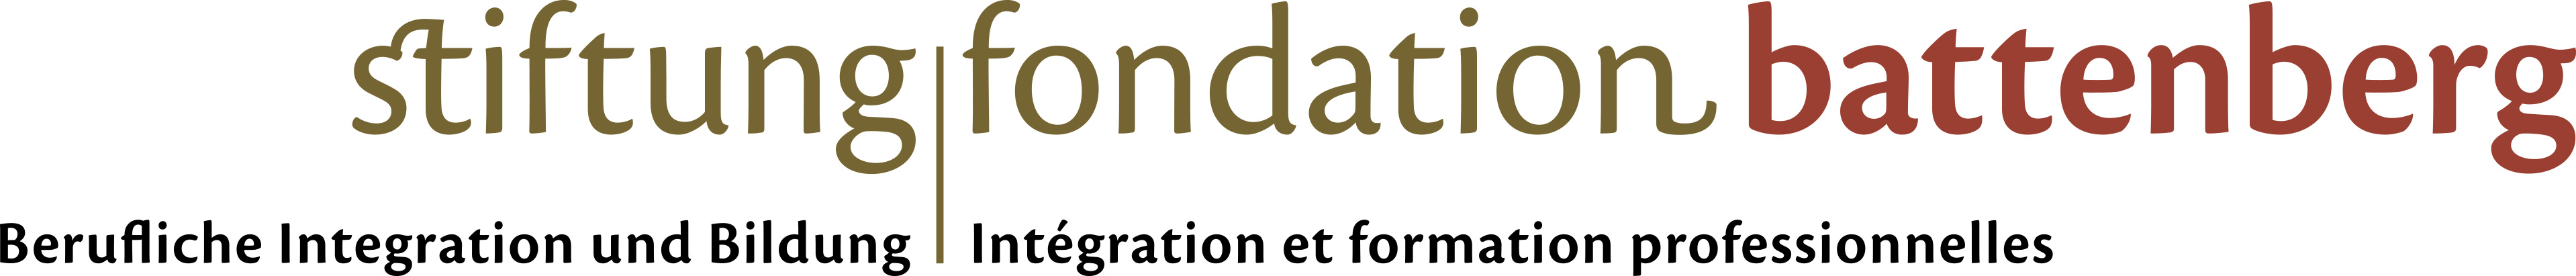 Fondation Battenberg